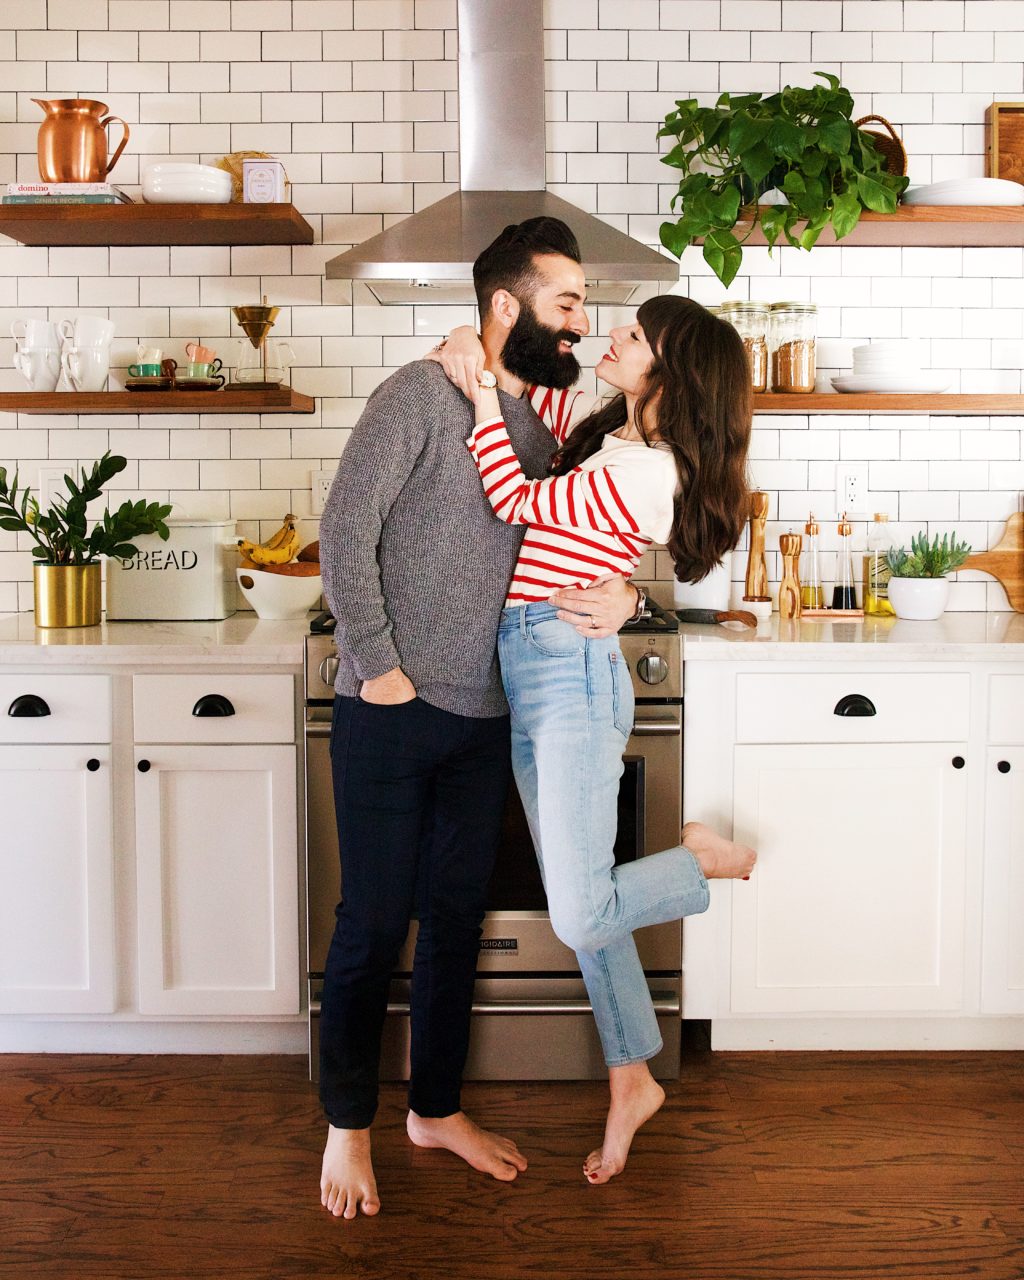 Couples Lifestyle Blog - Cute Couples Kitchen Photos